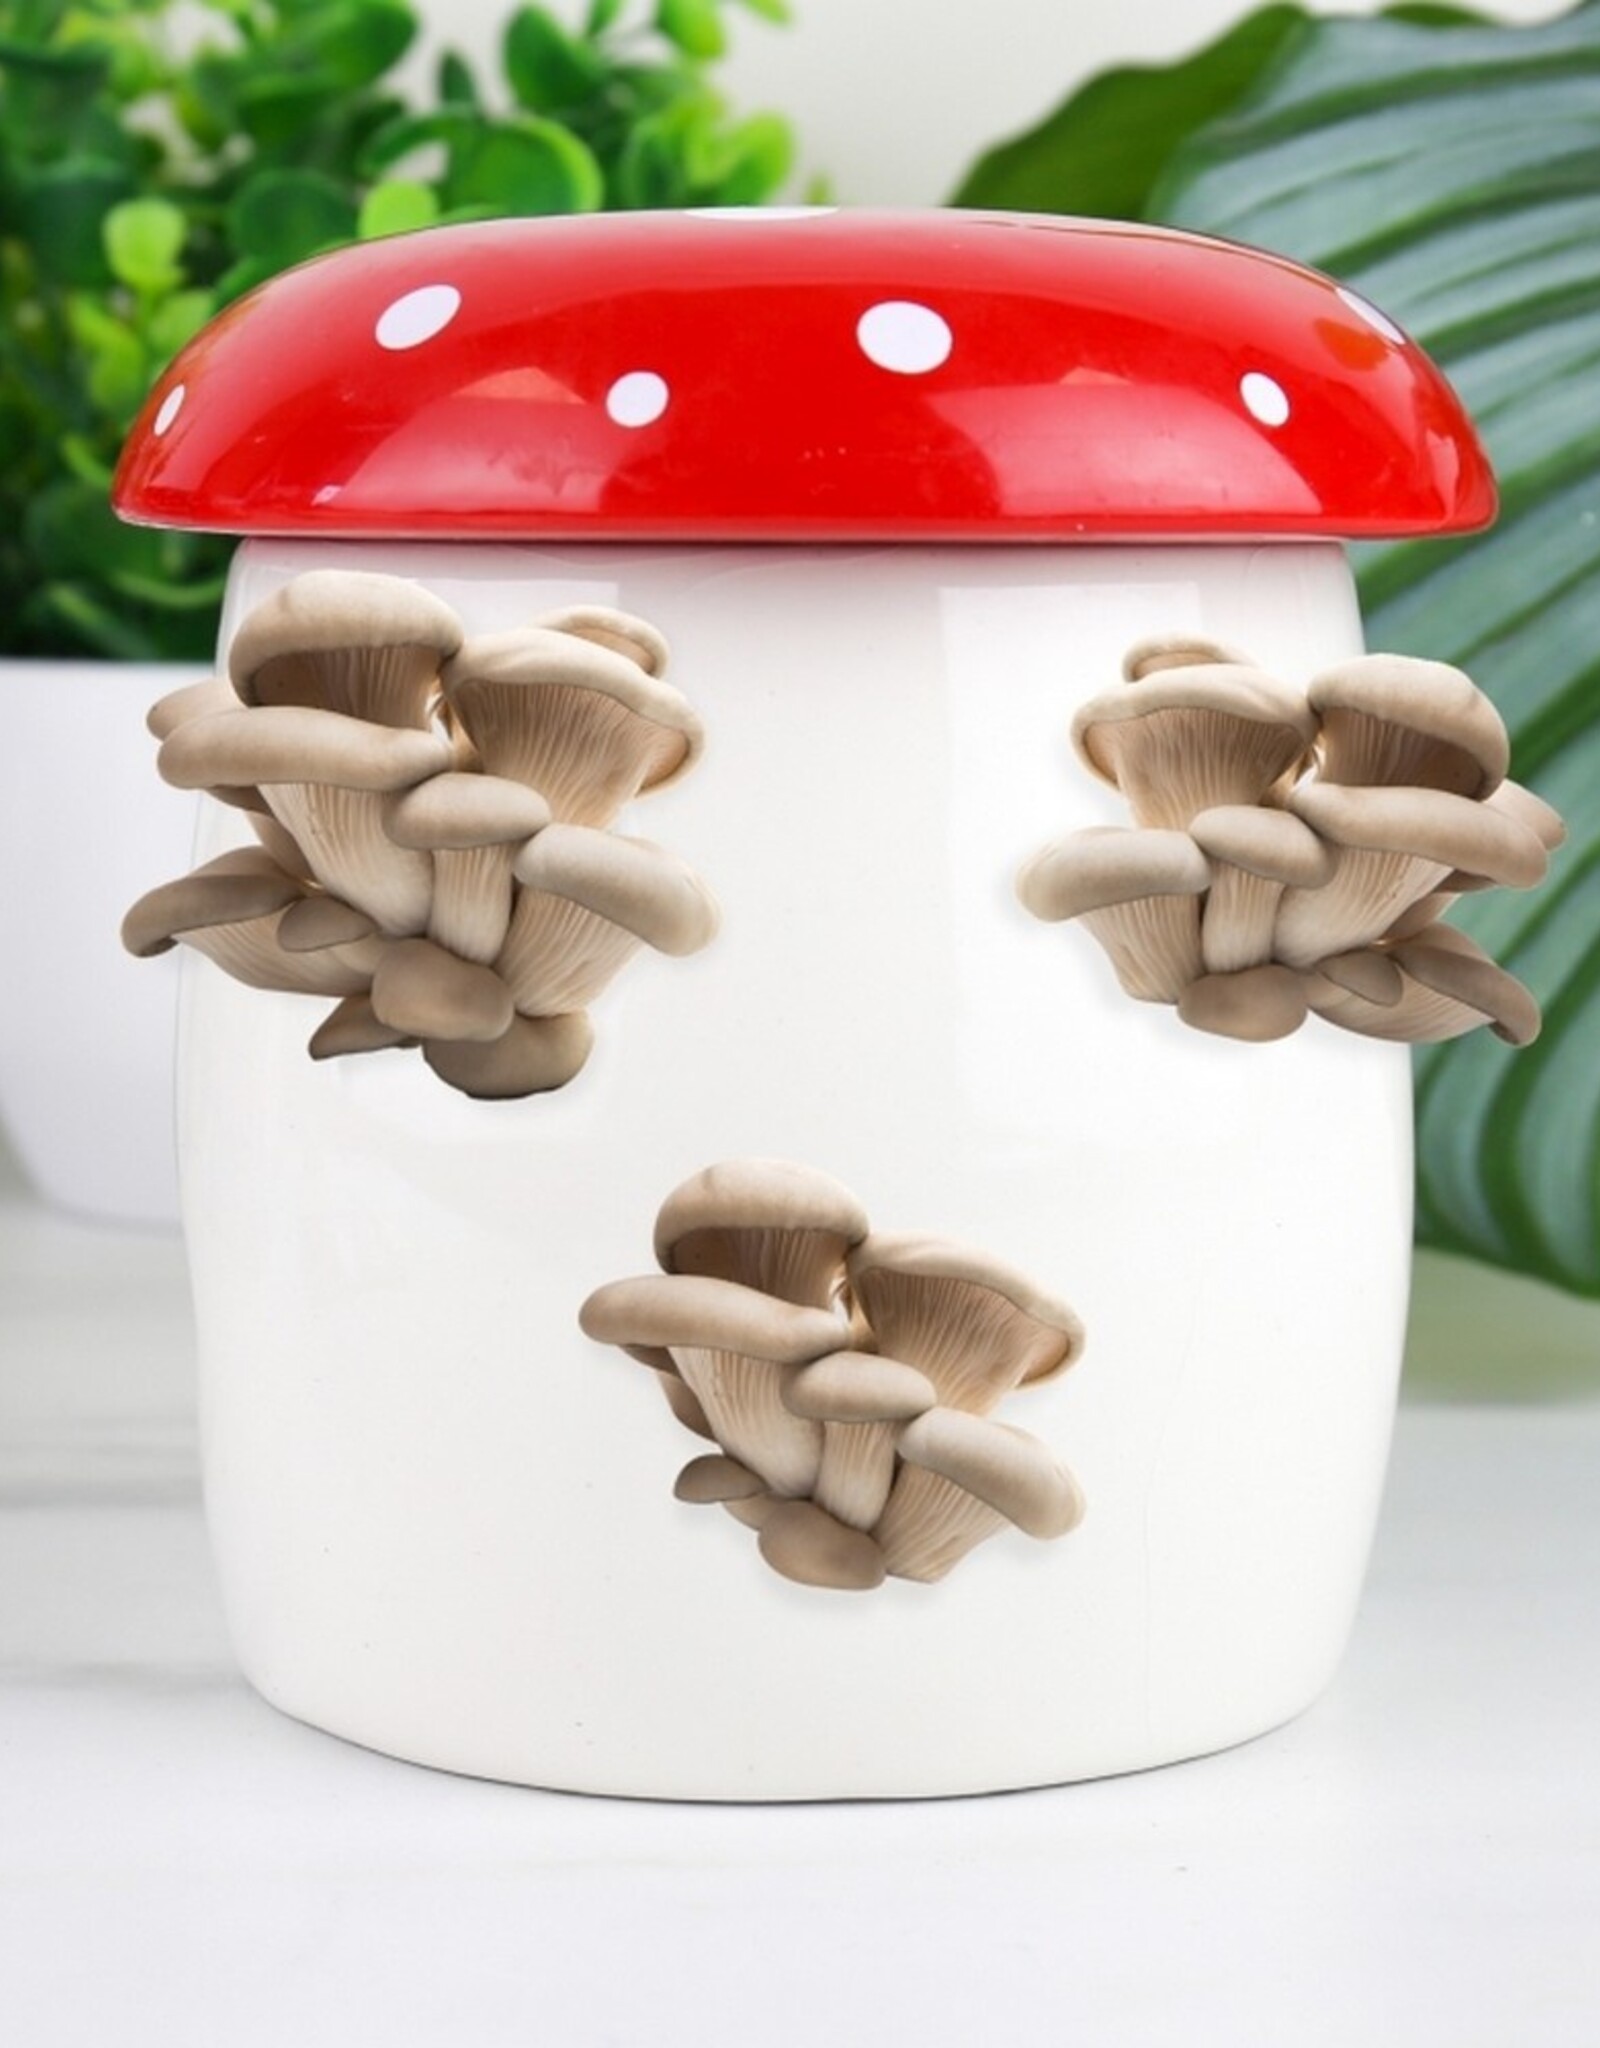 Gift Republic Mushroom Grow Kit